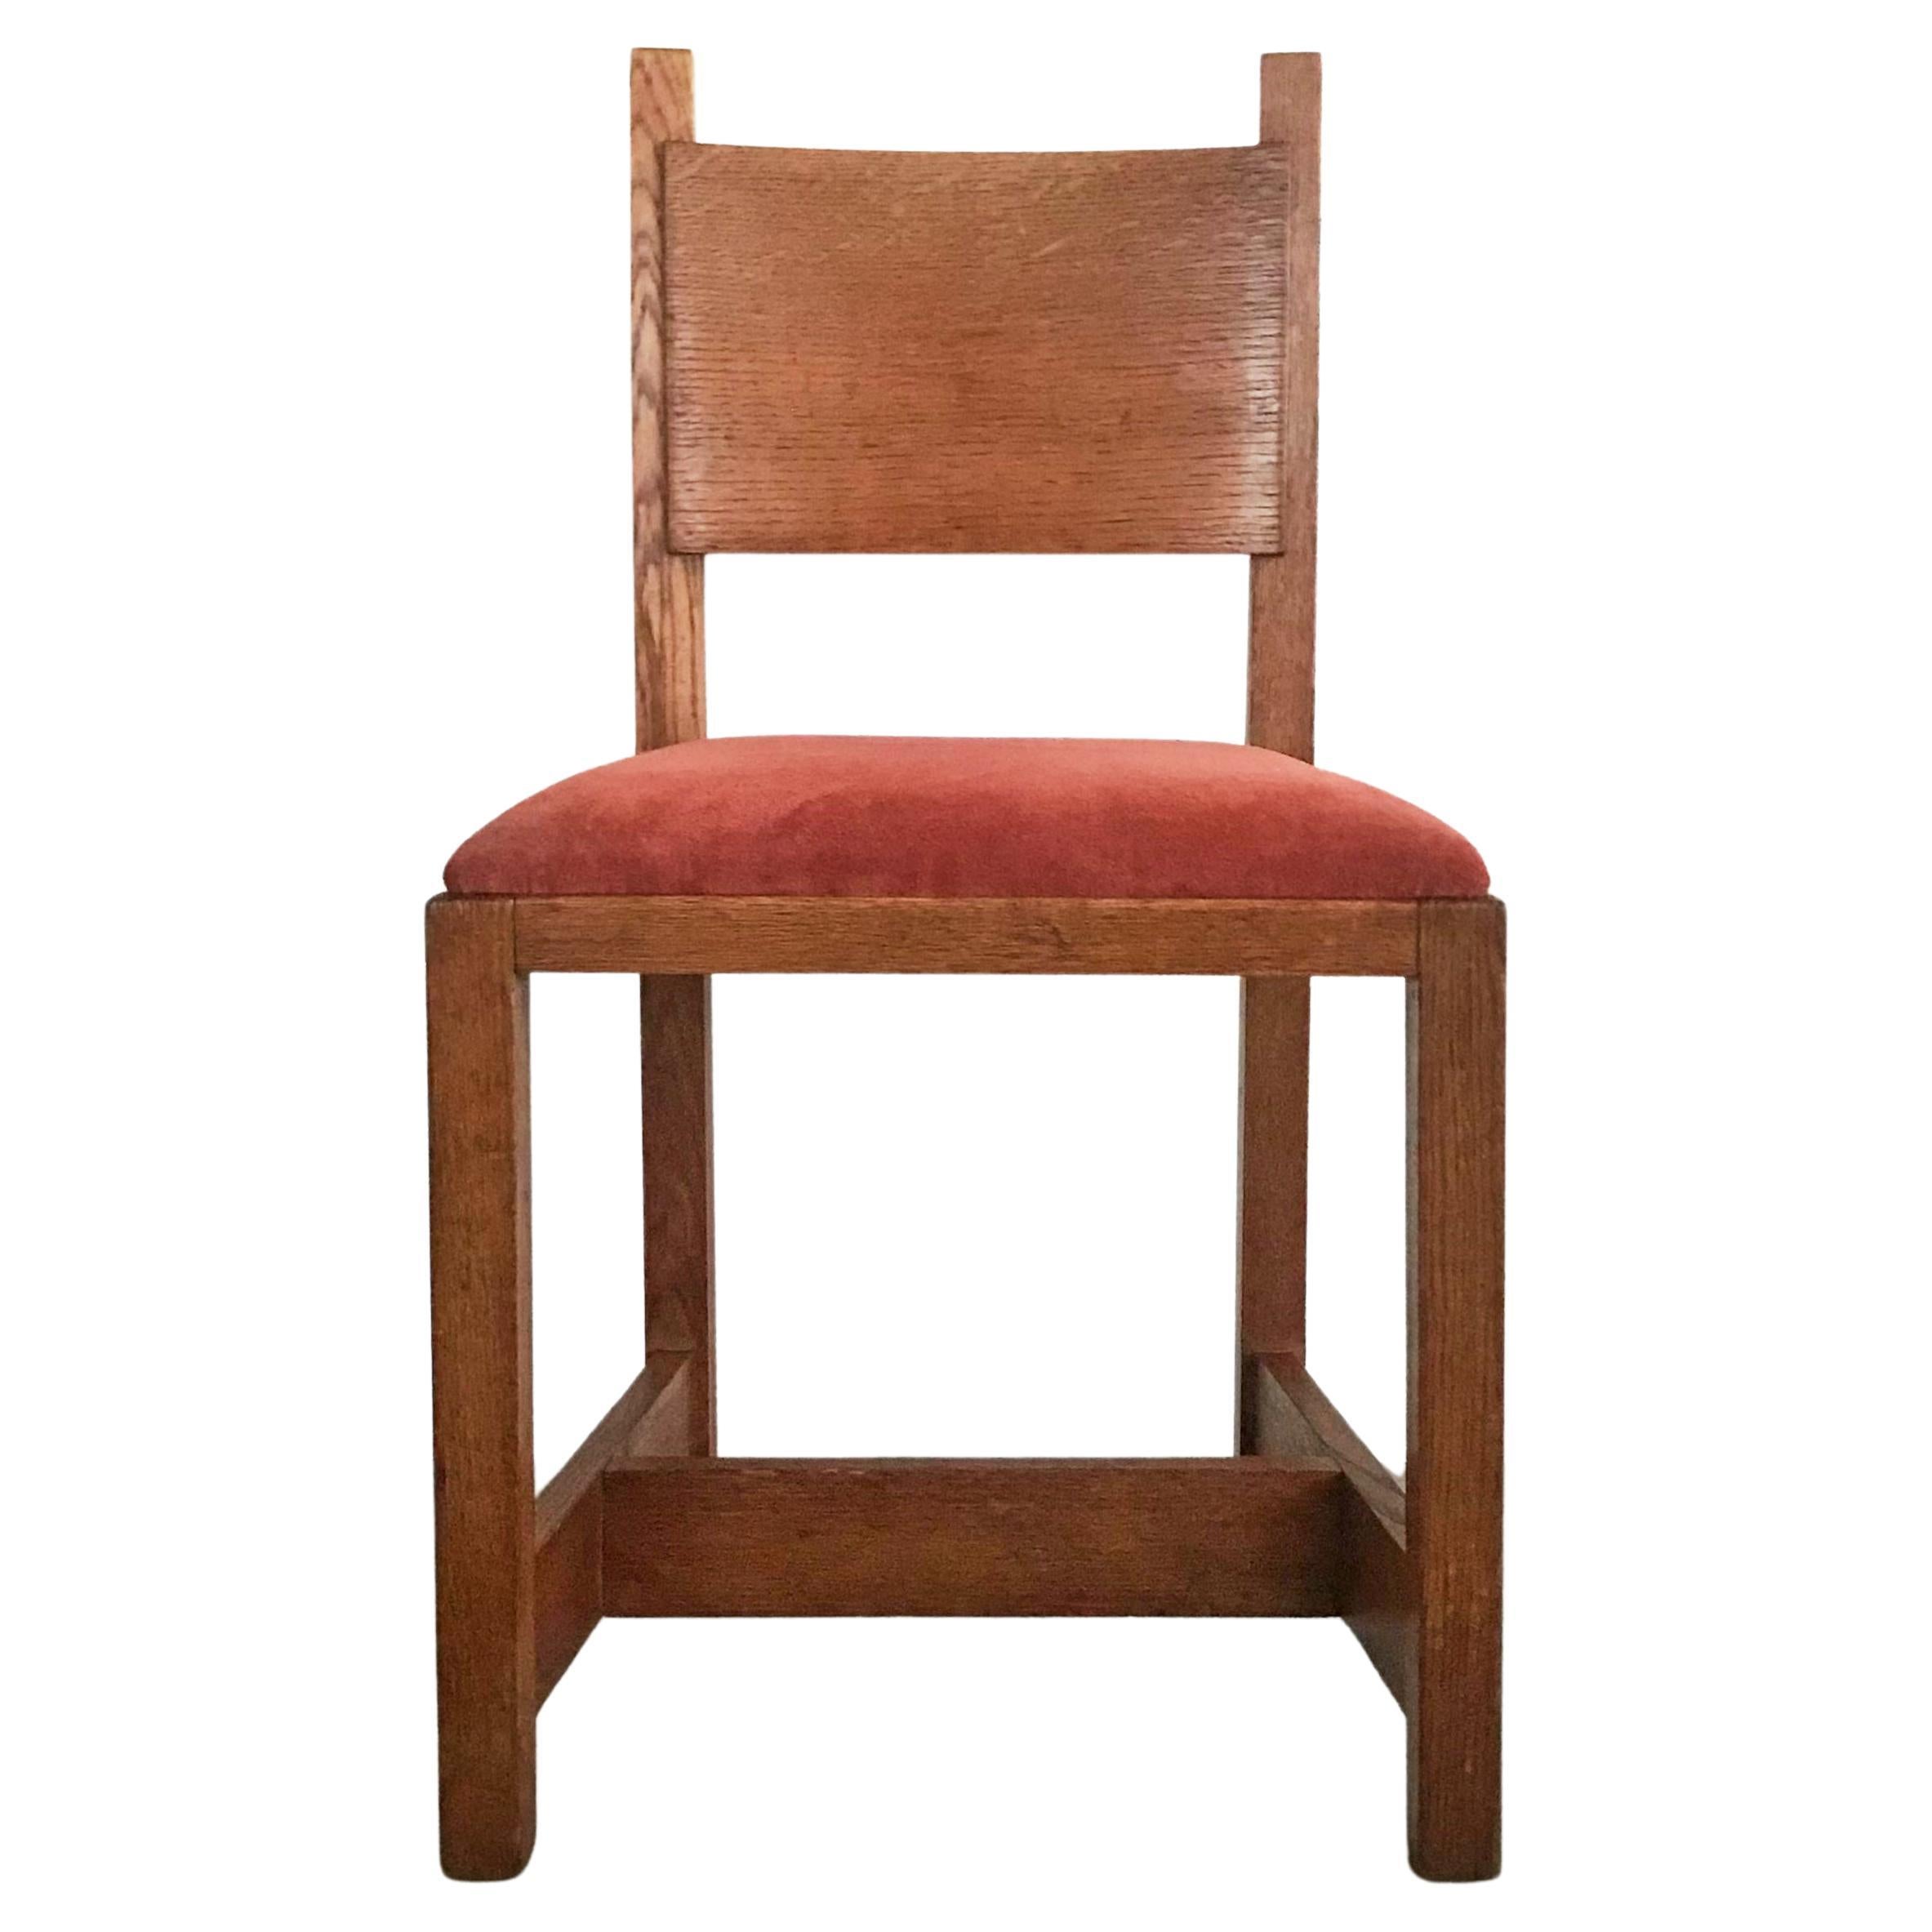 'Haagse School' Side Chair by Pander 1930s